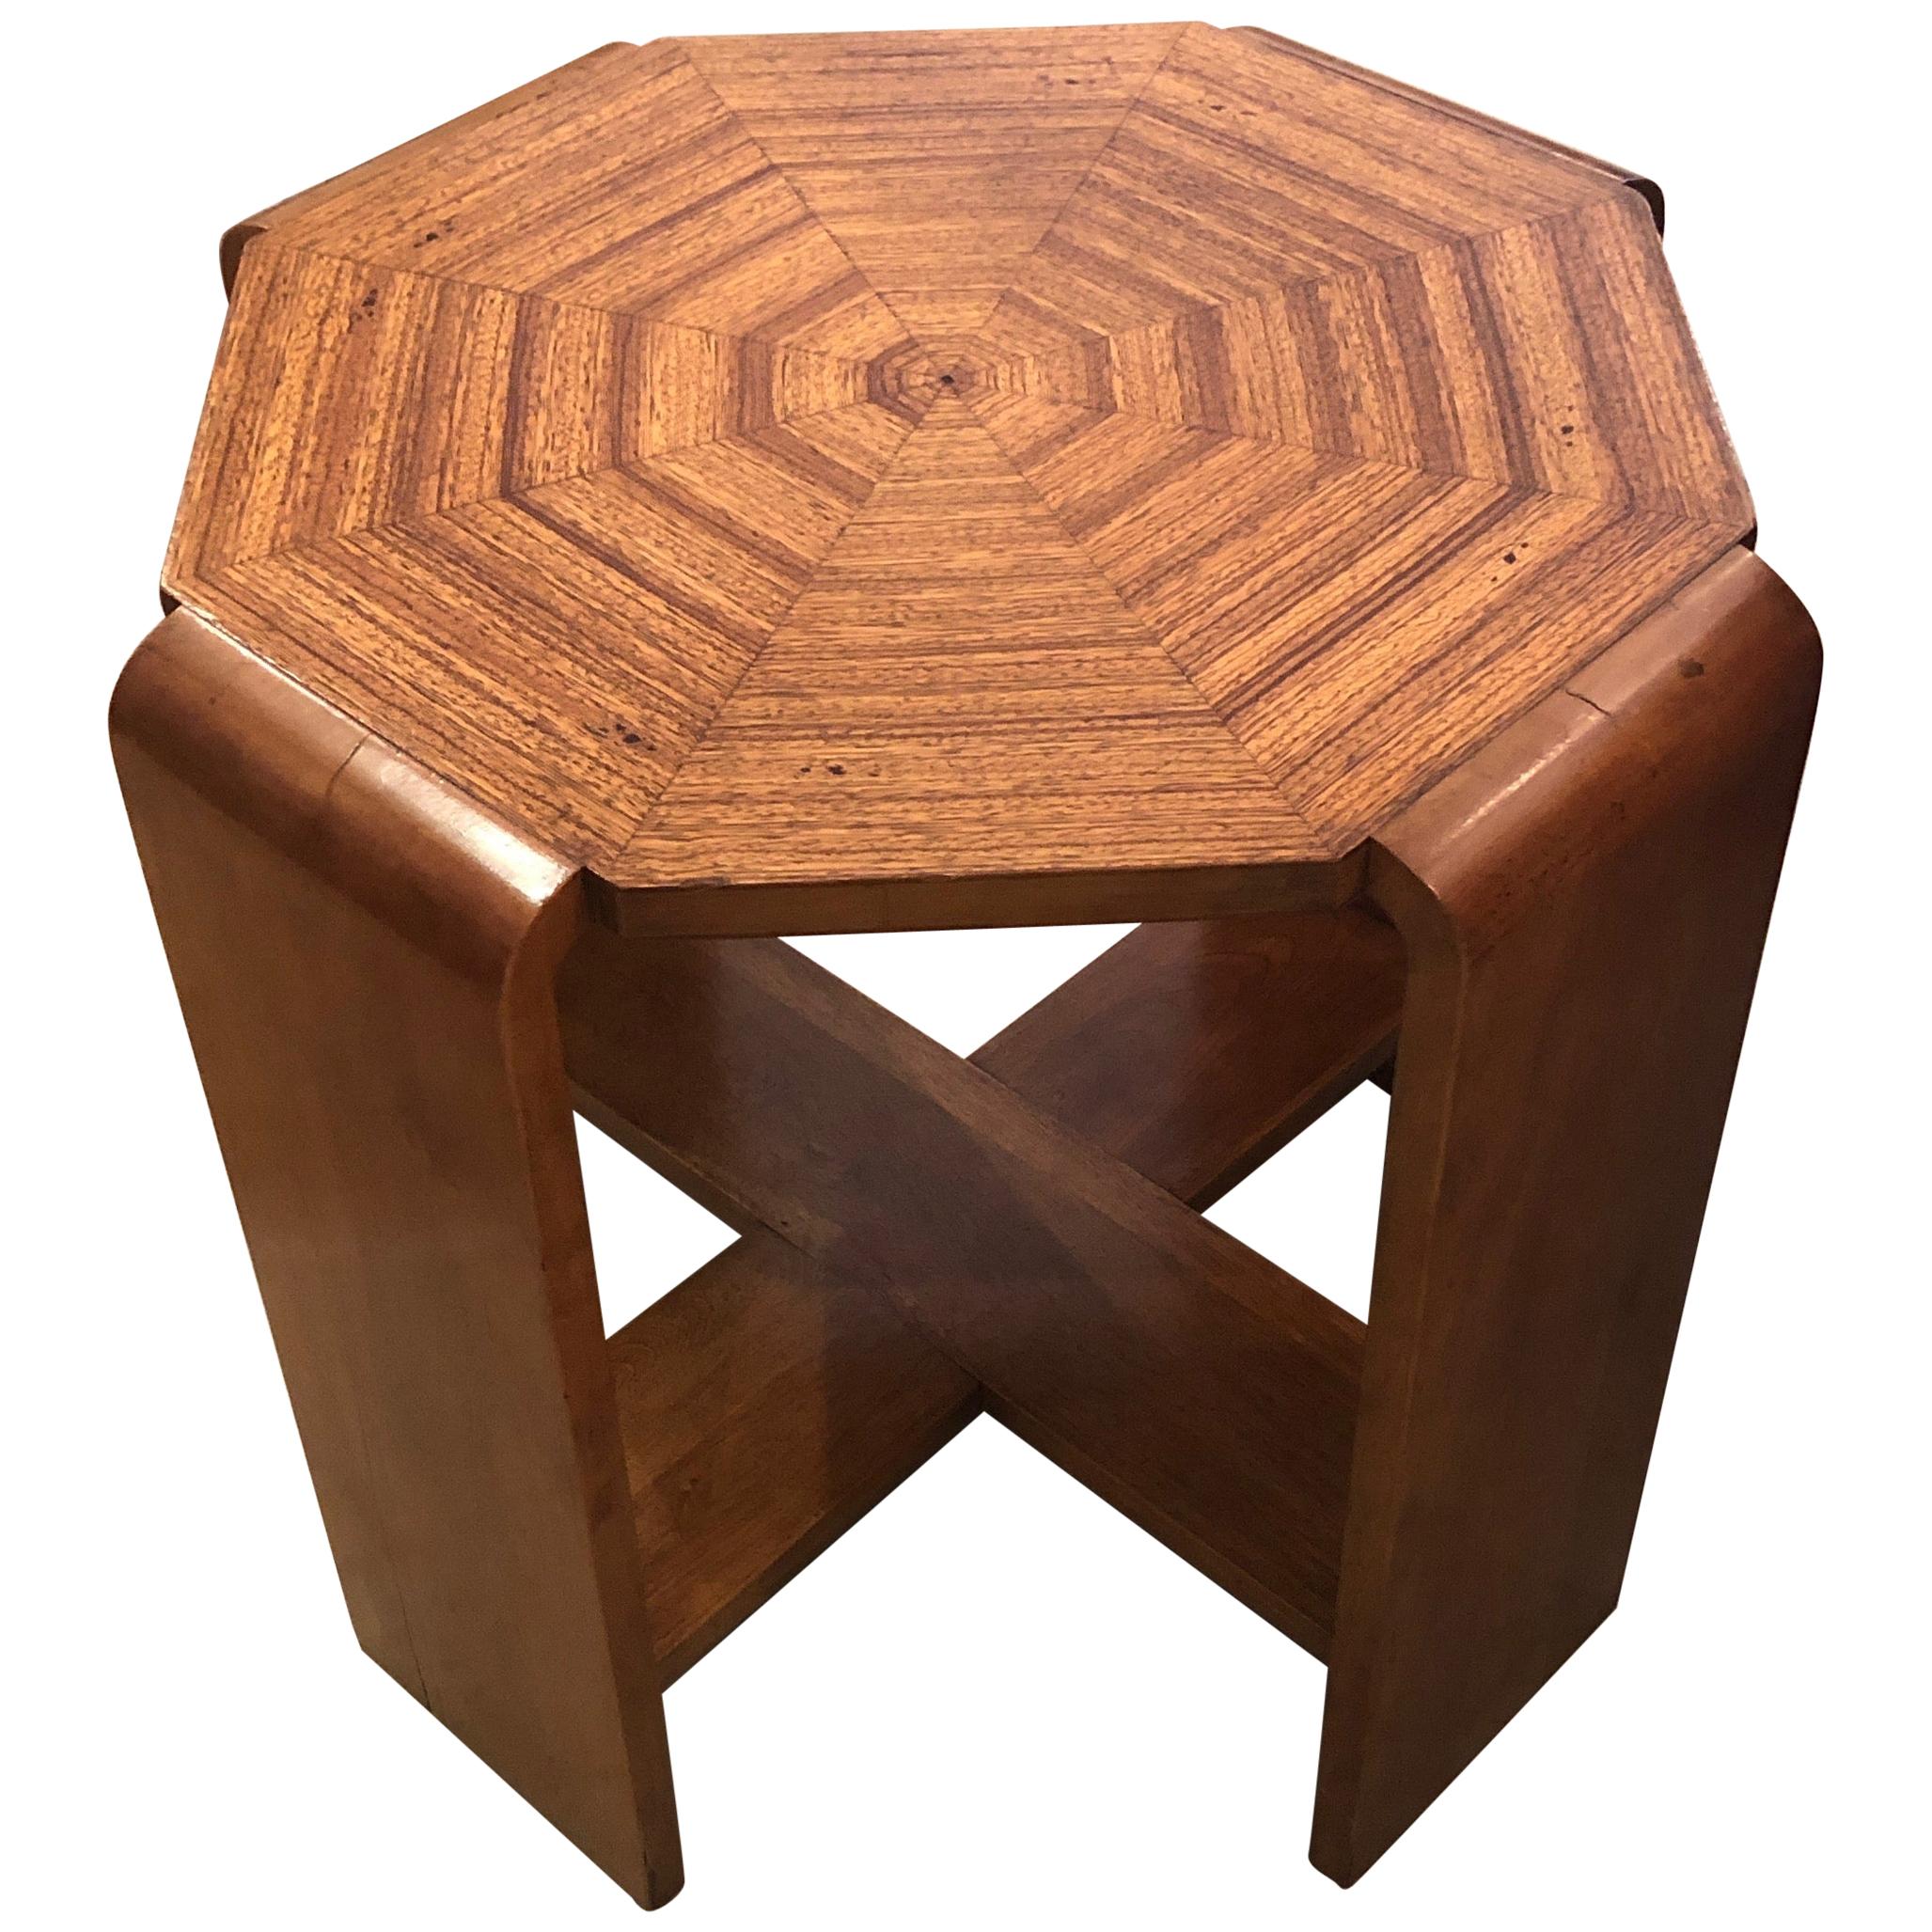 Superb Mid-Century Modern Octagonal Maple End Side Table